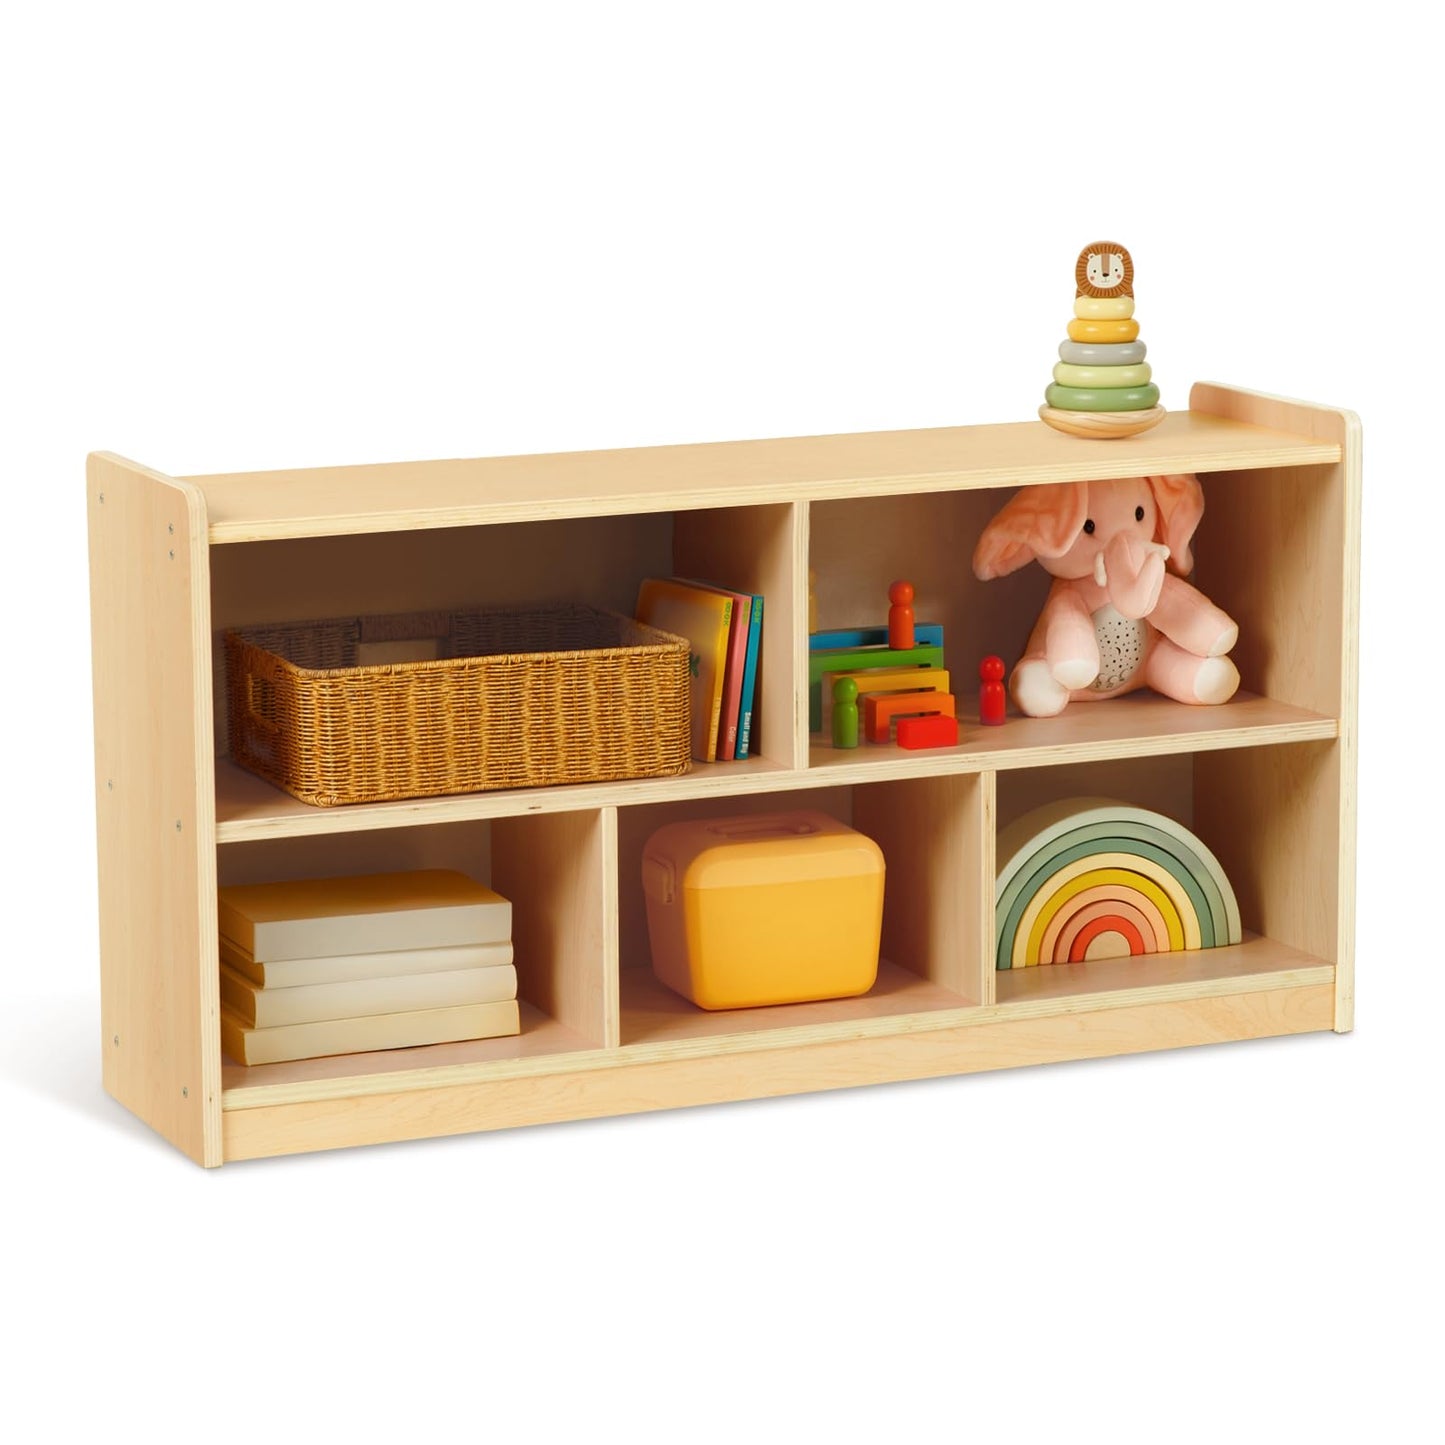 TOOKYLAND 5-Compartment Wooden Storage Cabinet, 2-Shelf Montessori Shelf Toy Organizers and Storage, Kids Classroom Organizer, Playroom, Daycare and